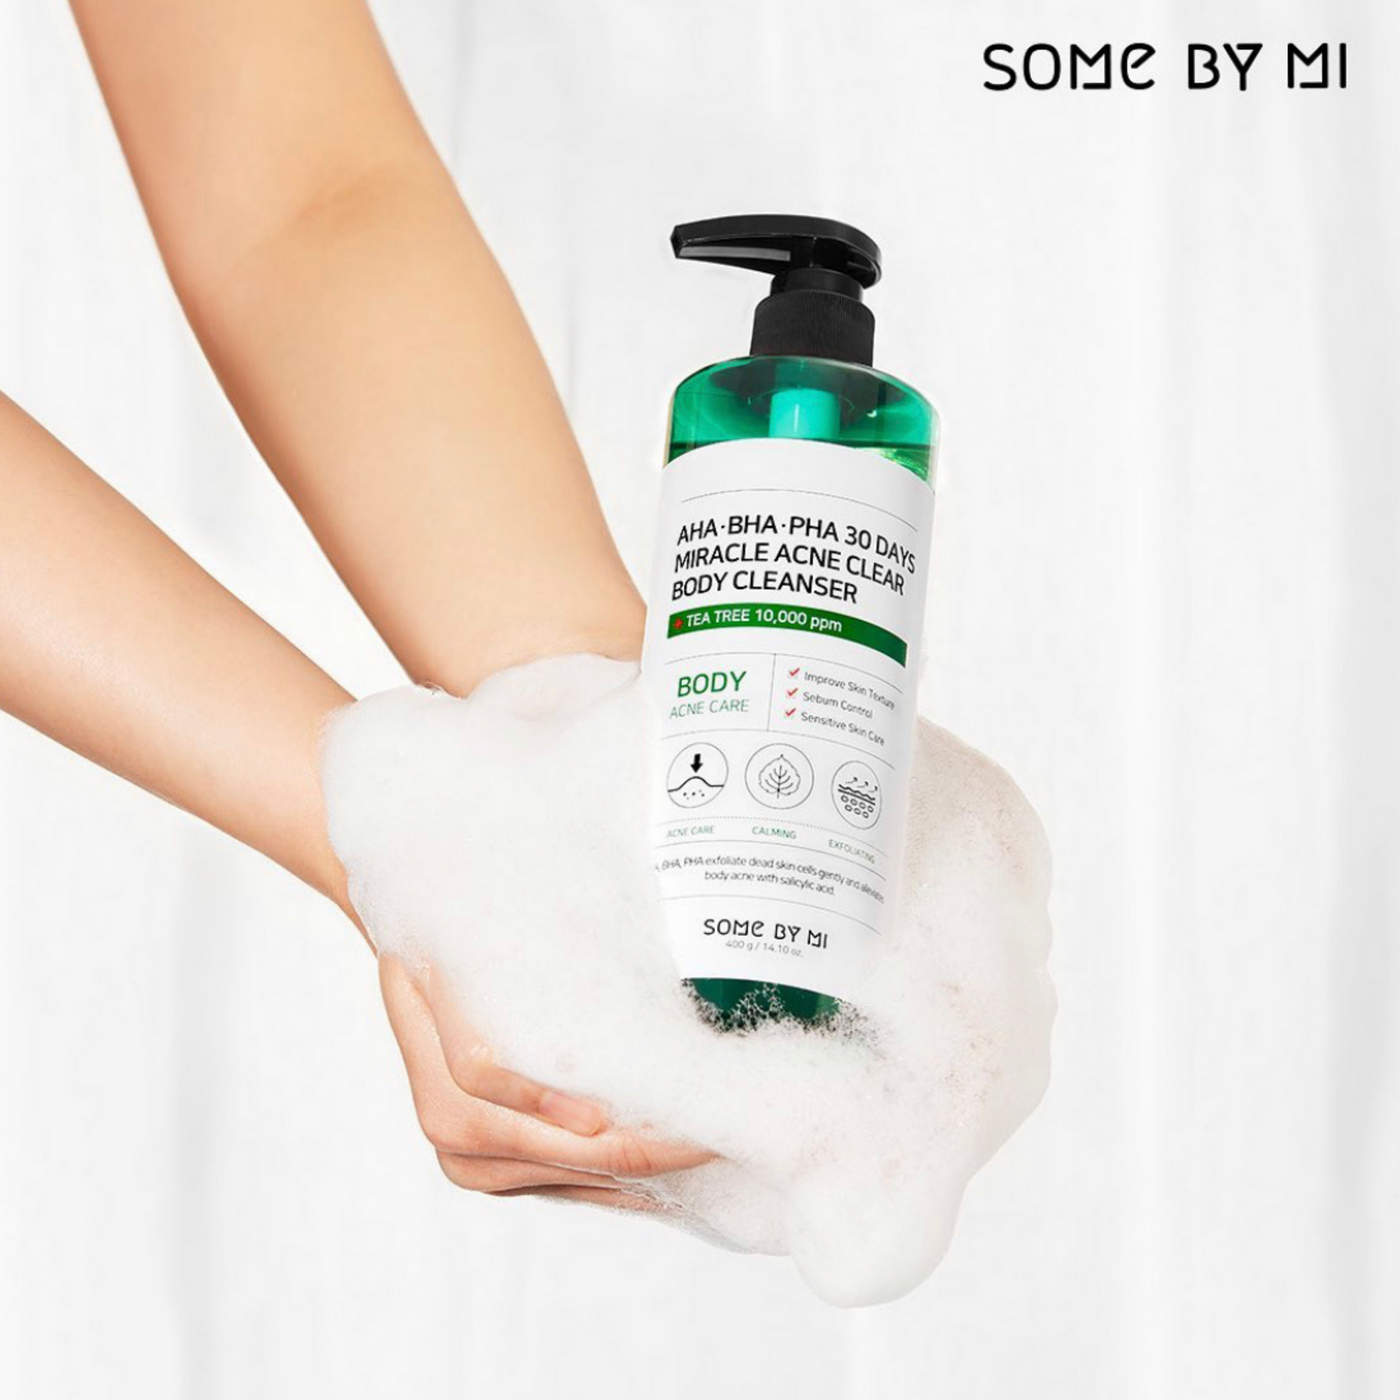 [SOME BY MI] Sabonete Líquido Corporal para Acne AHA BHA PHA 30 Days Miracle Clear Body Cleanser 400g 🇰🇷